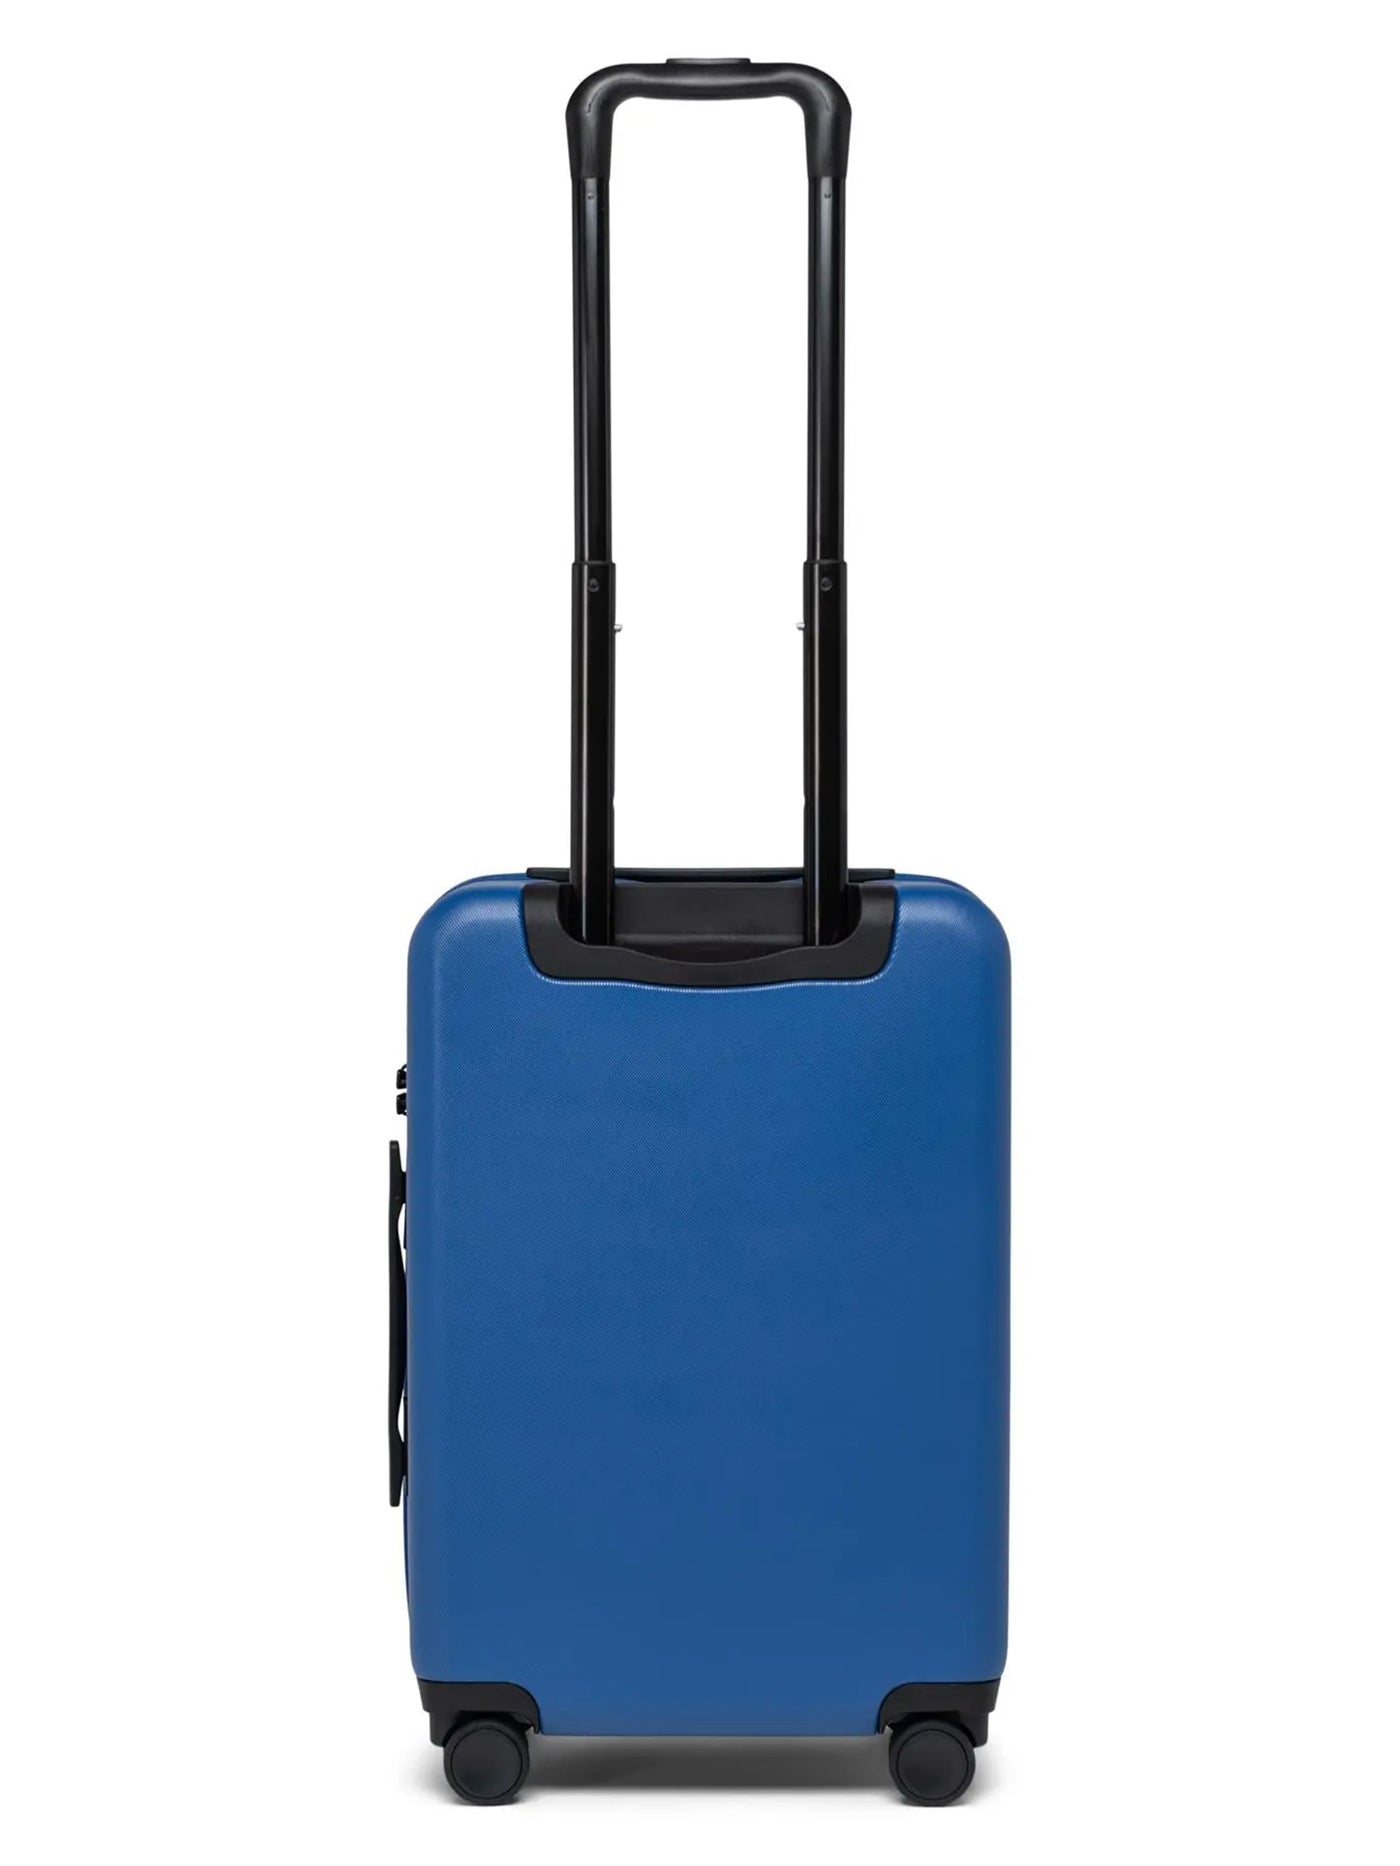 Herschel Heritage Hardshell Carry-On Large Suitcase